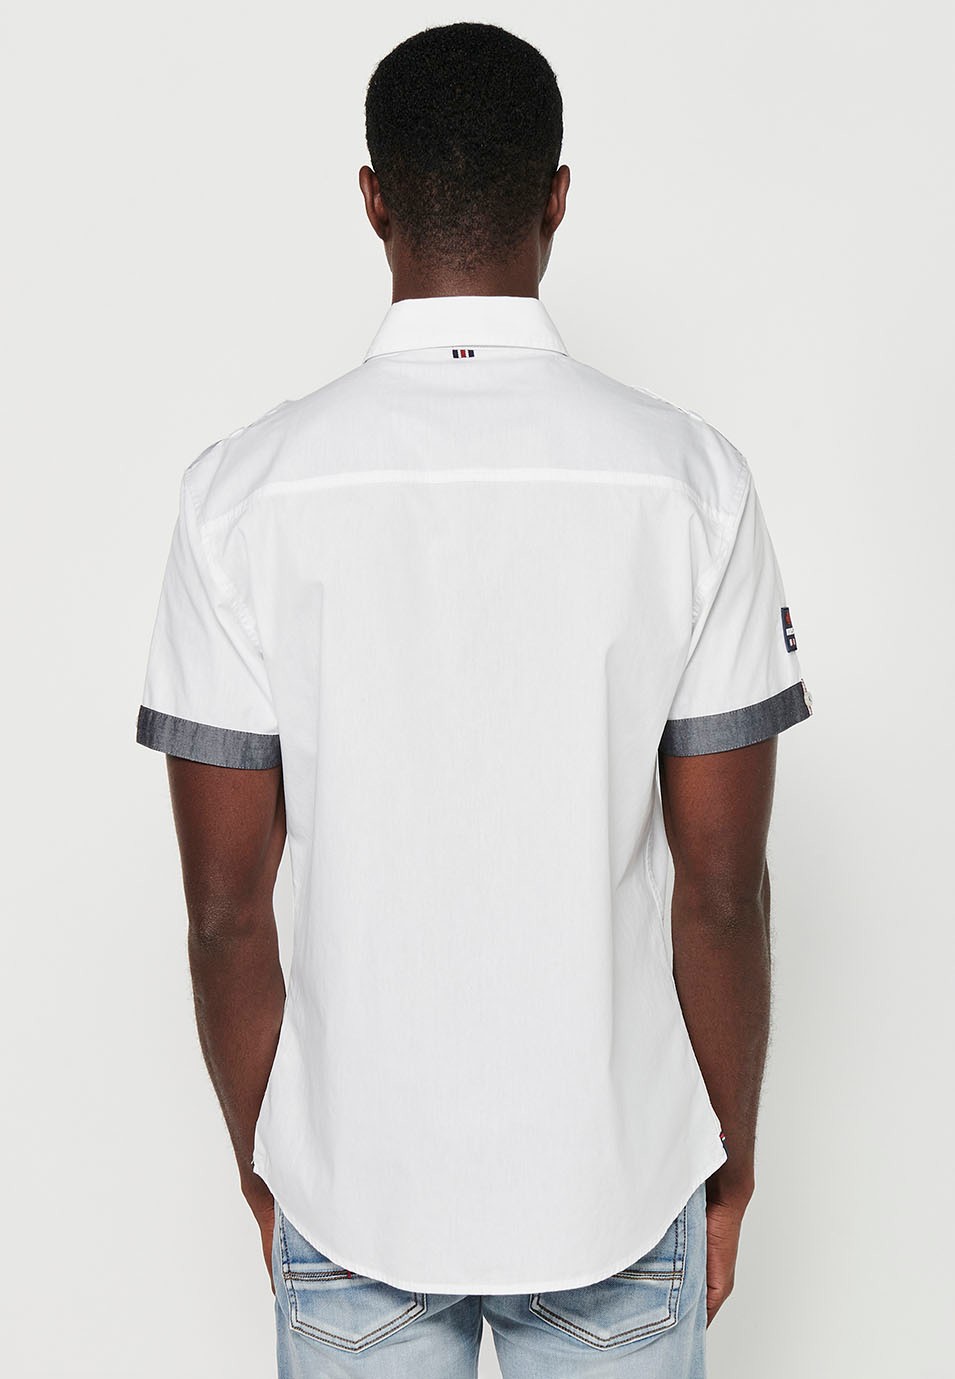 Camisa de algodón, manga corta, detalles hombro, color blanco para hombre